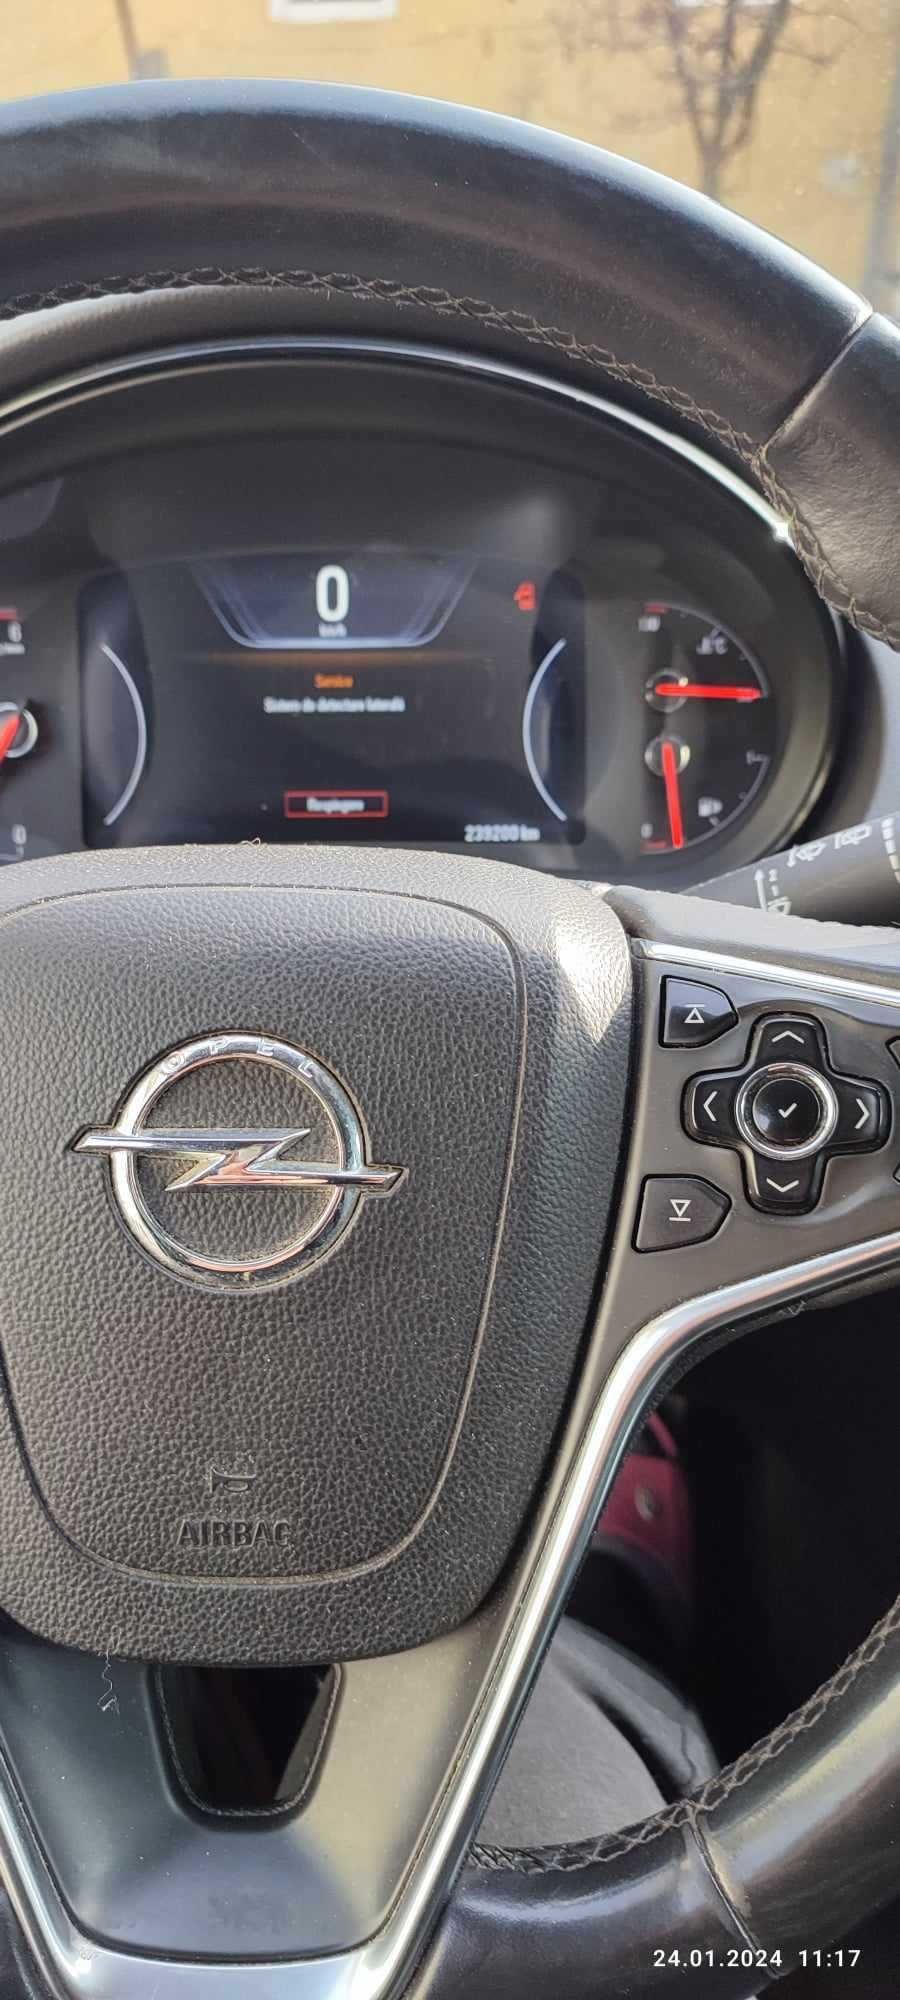 Proprietar vind Opel insignia 2.0 an 2014.